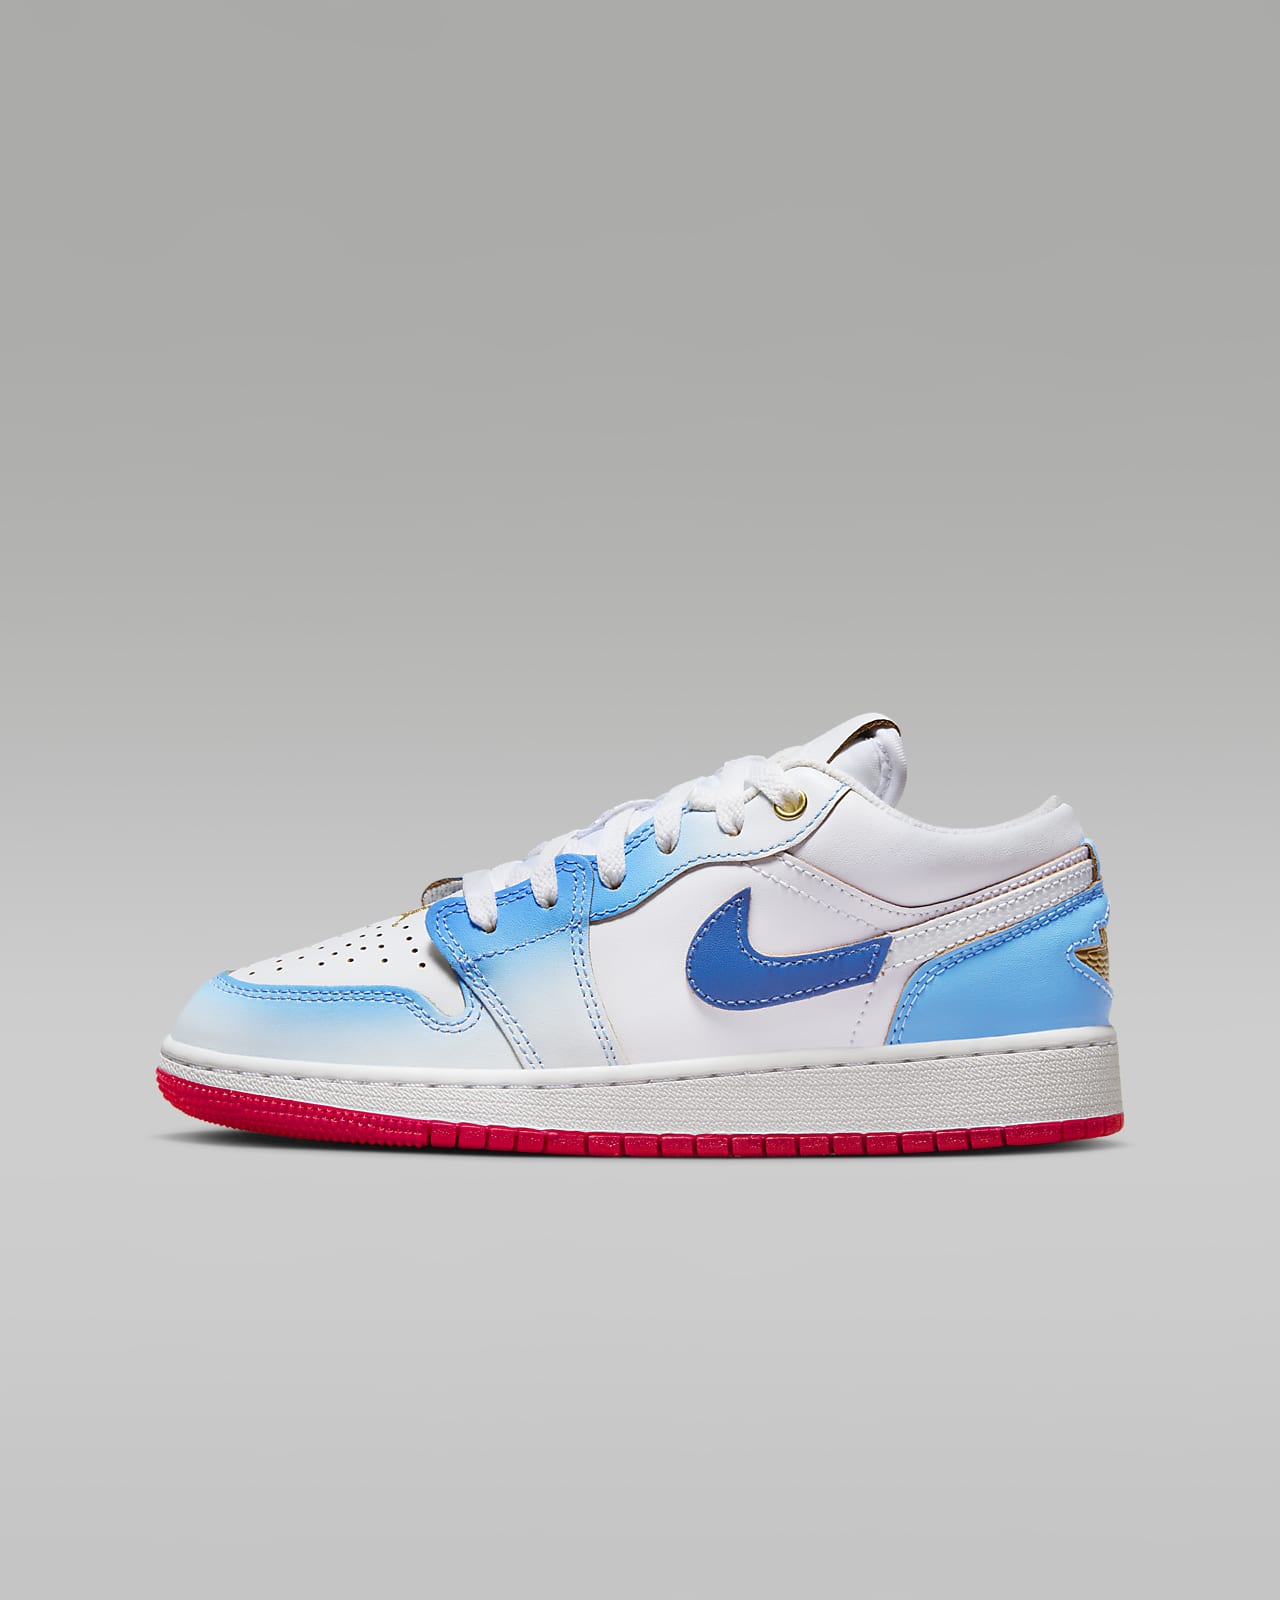 Air Jordan 1 Low Women's Shoe, by Nike Size 7 (Blue)